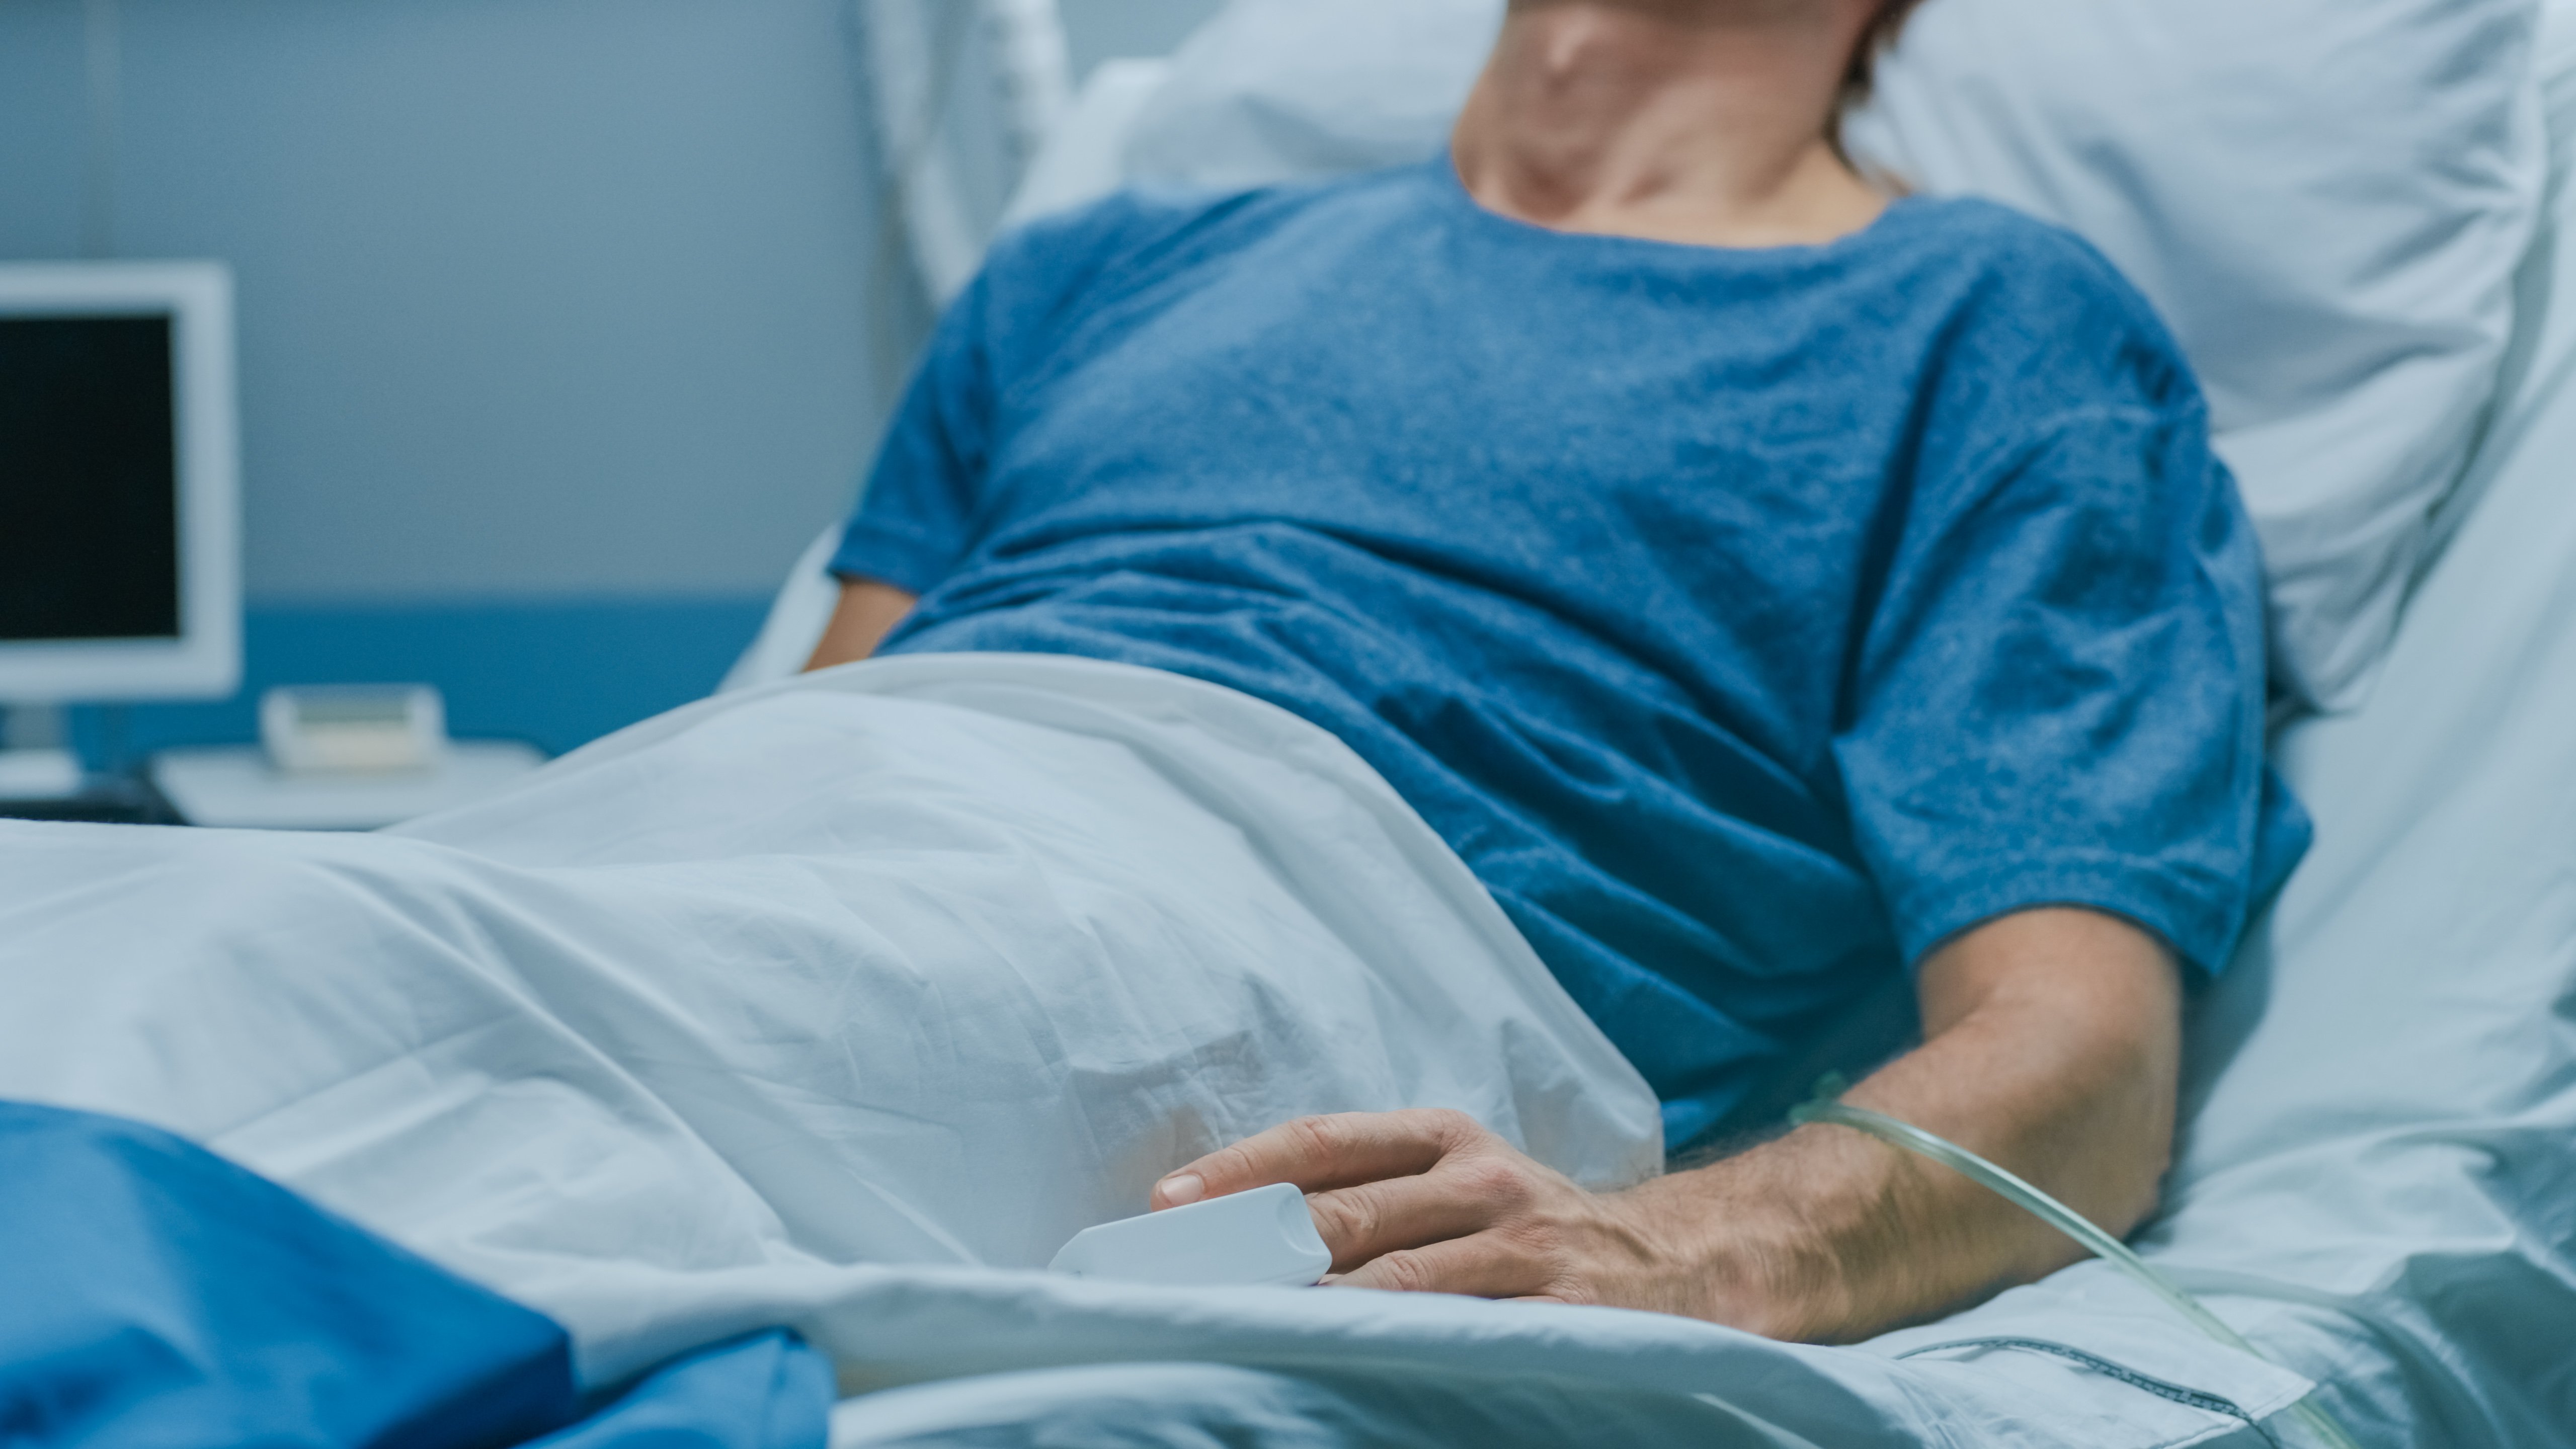 Im Krankenhaus, älterer Patient im Bett liegend | Quelle: Shutterstock